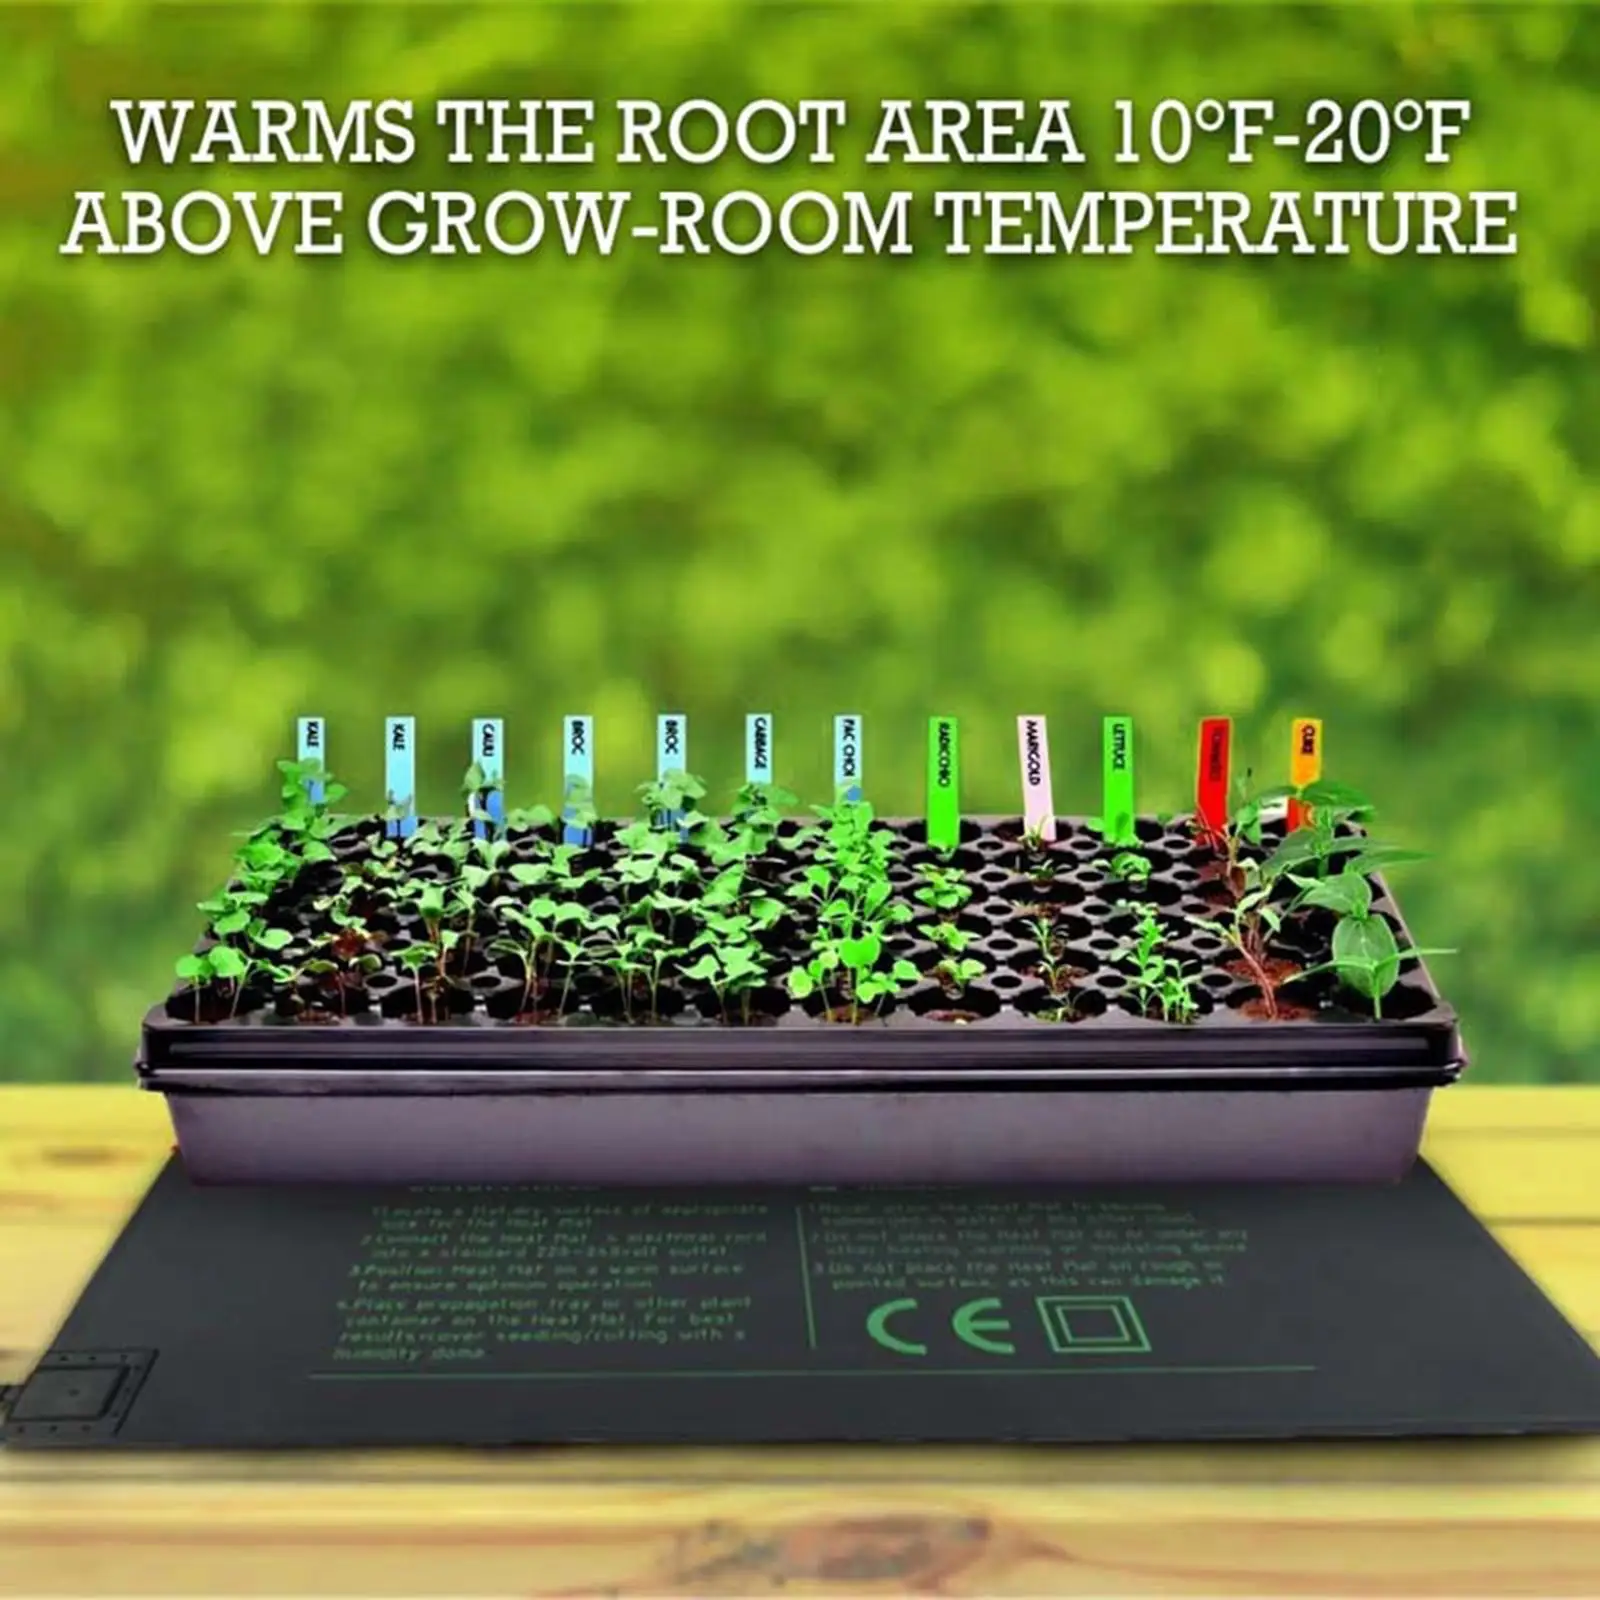 10"x20" Seed Starting Heat Mat Seed Cloning Heating Pad Garden Outdoor Living US 